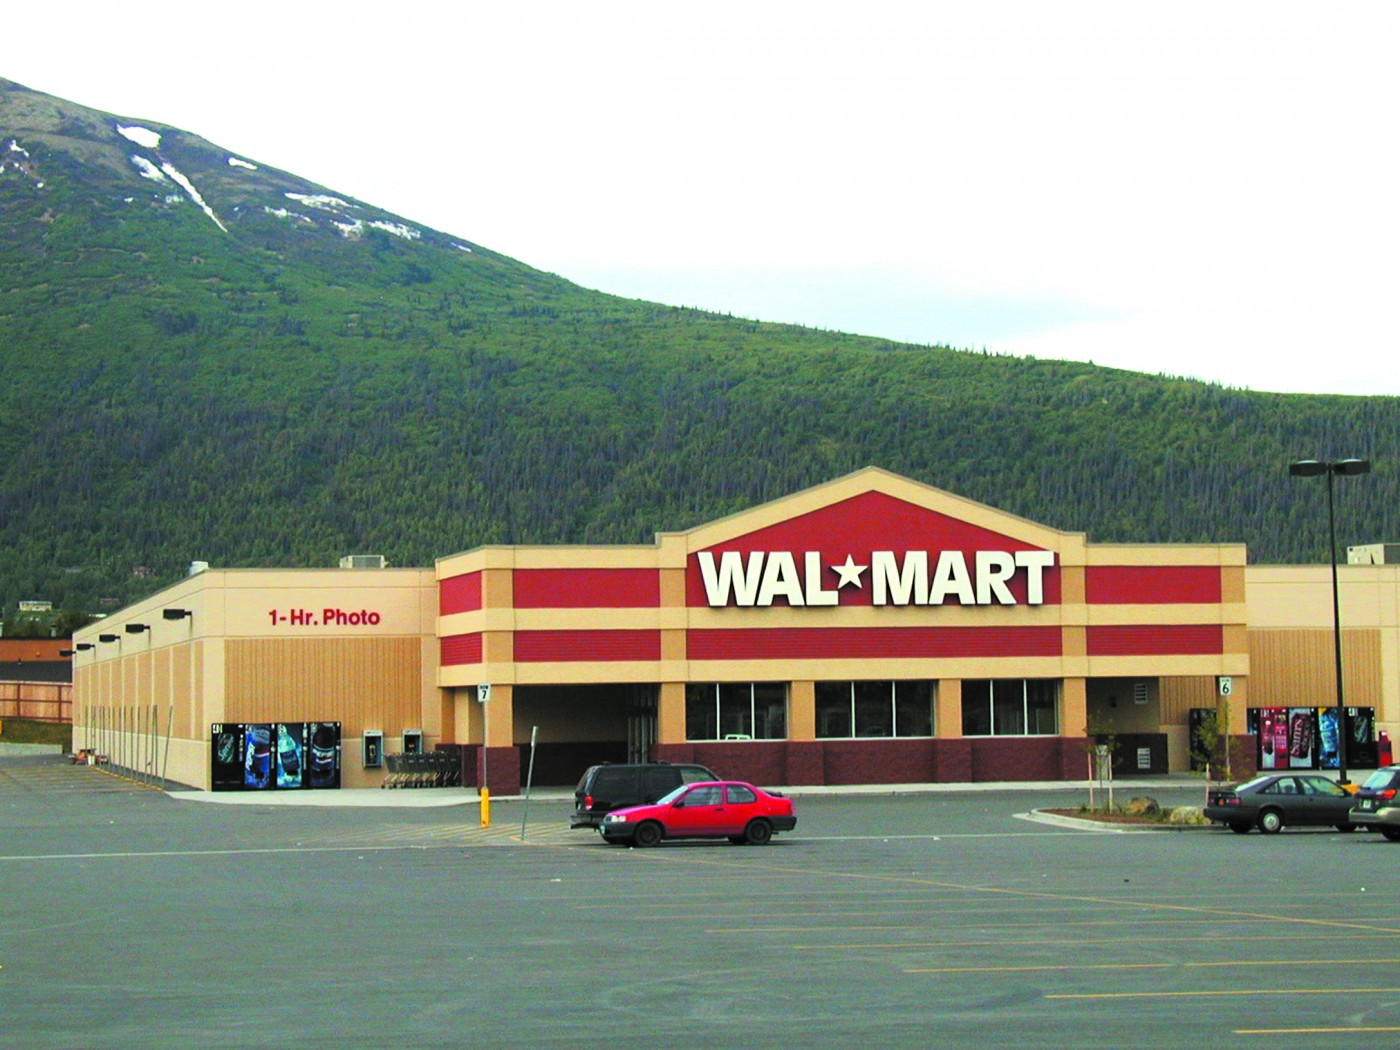 Walmart Supercenter - Las Vegas, NV 89148